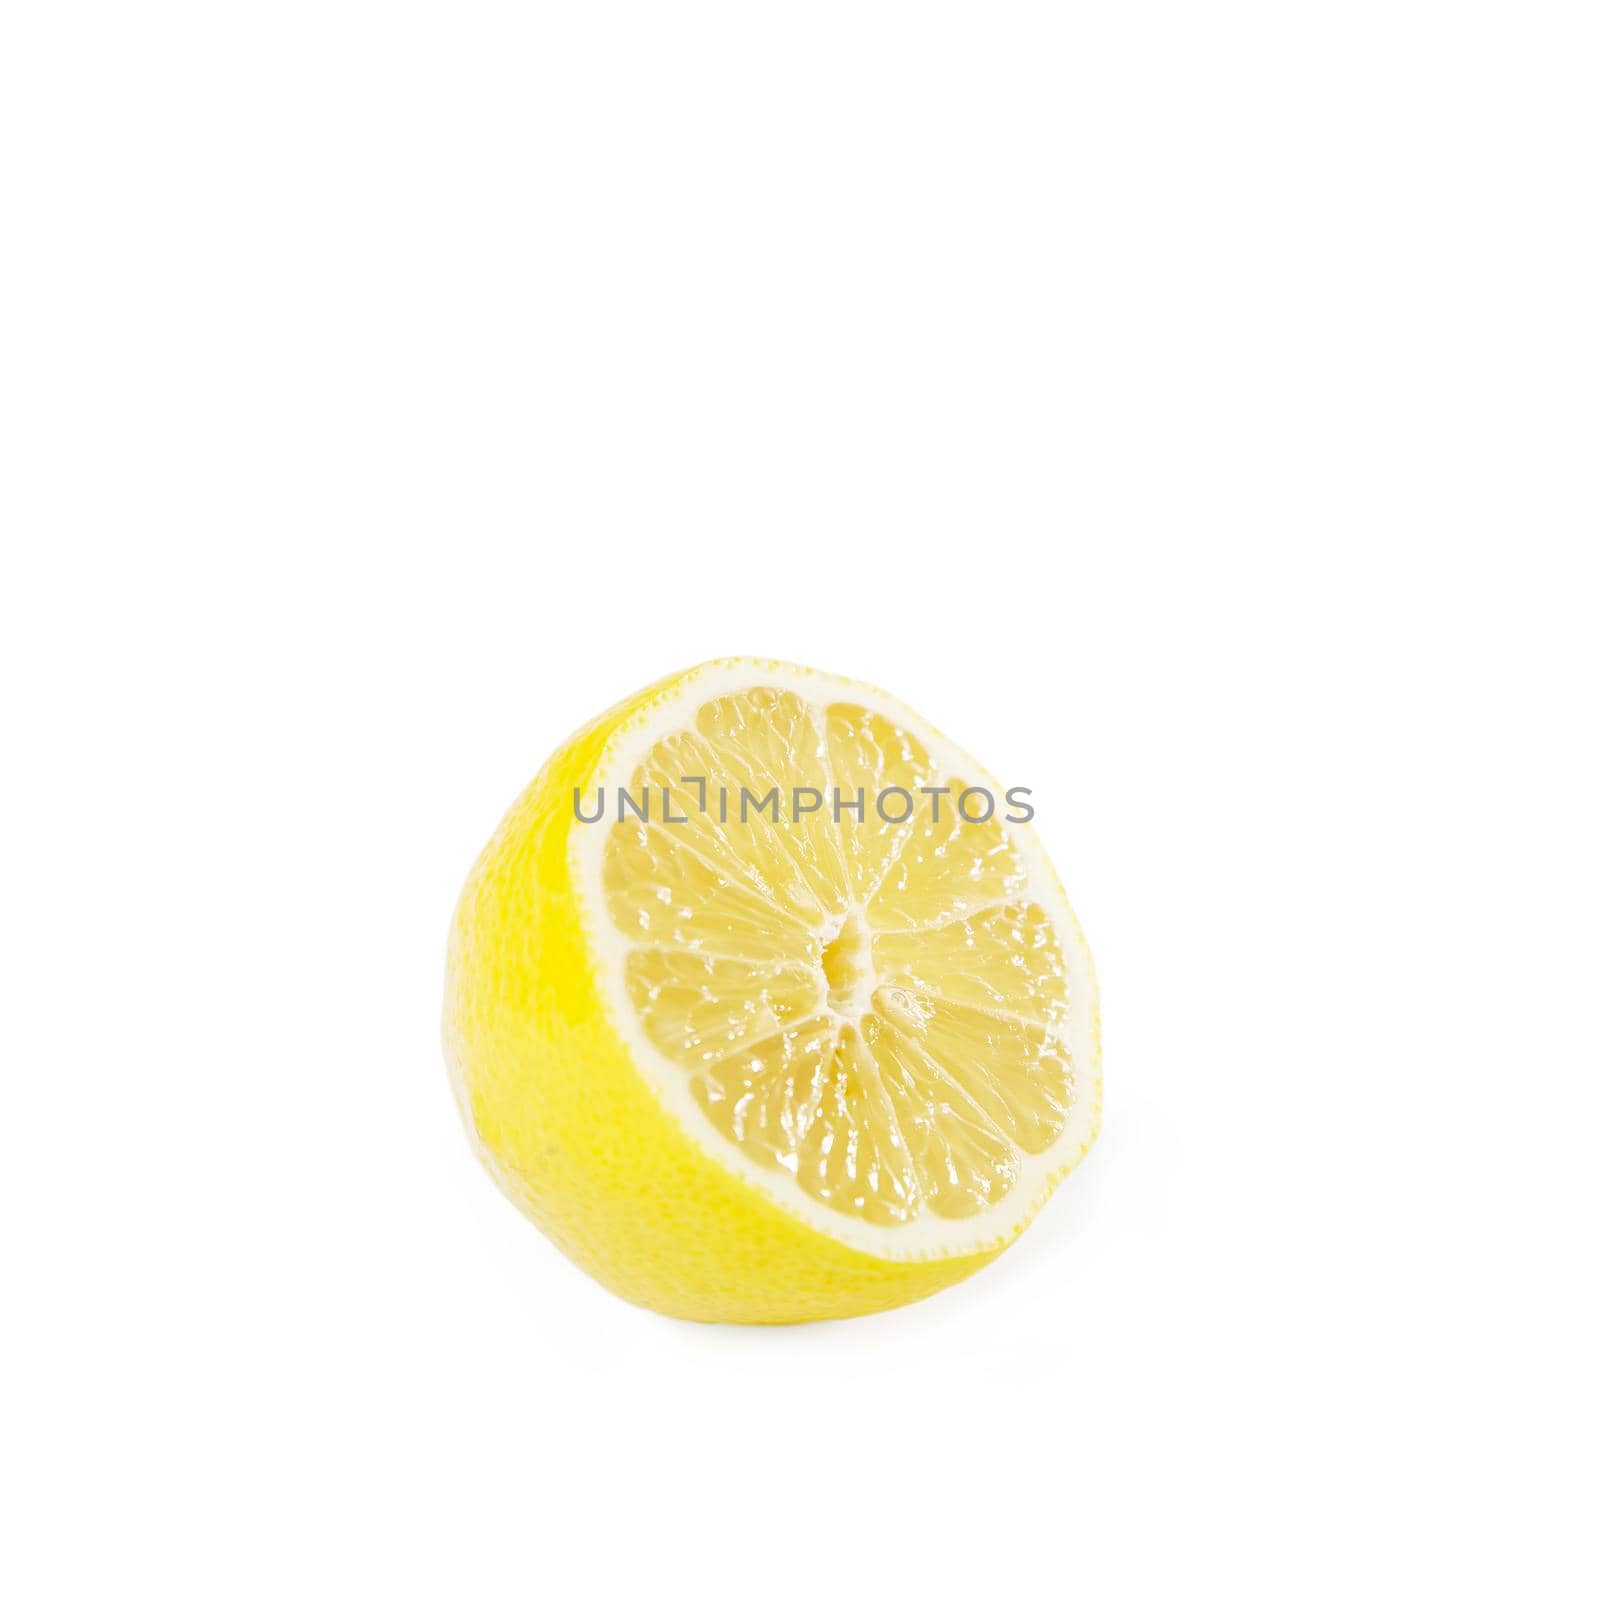 Half sliced lemon is on white background